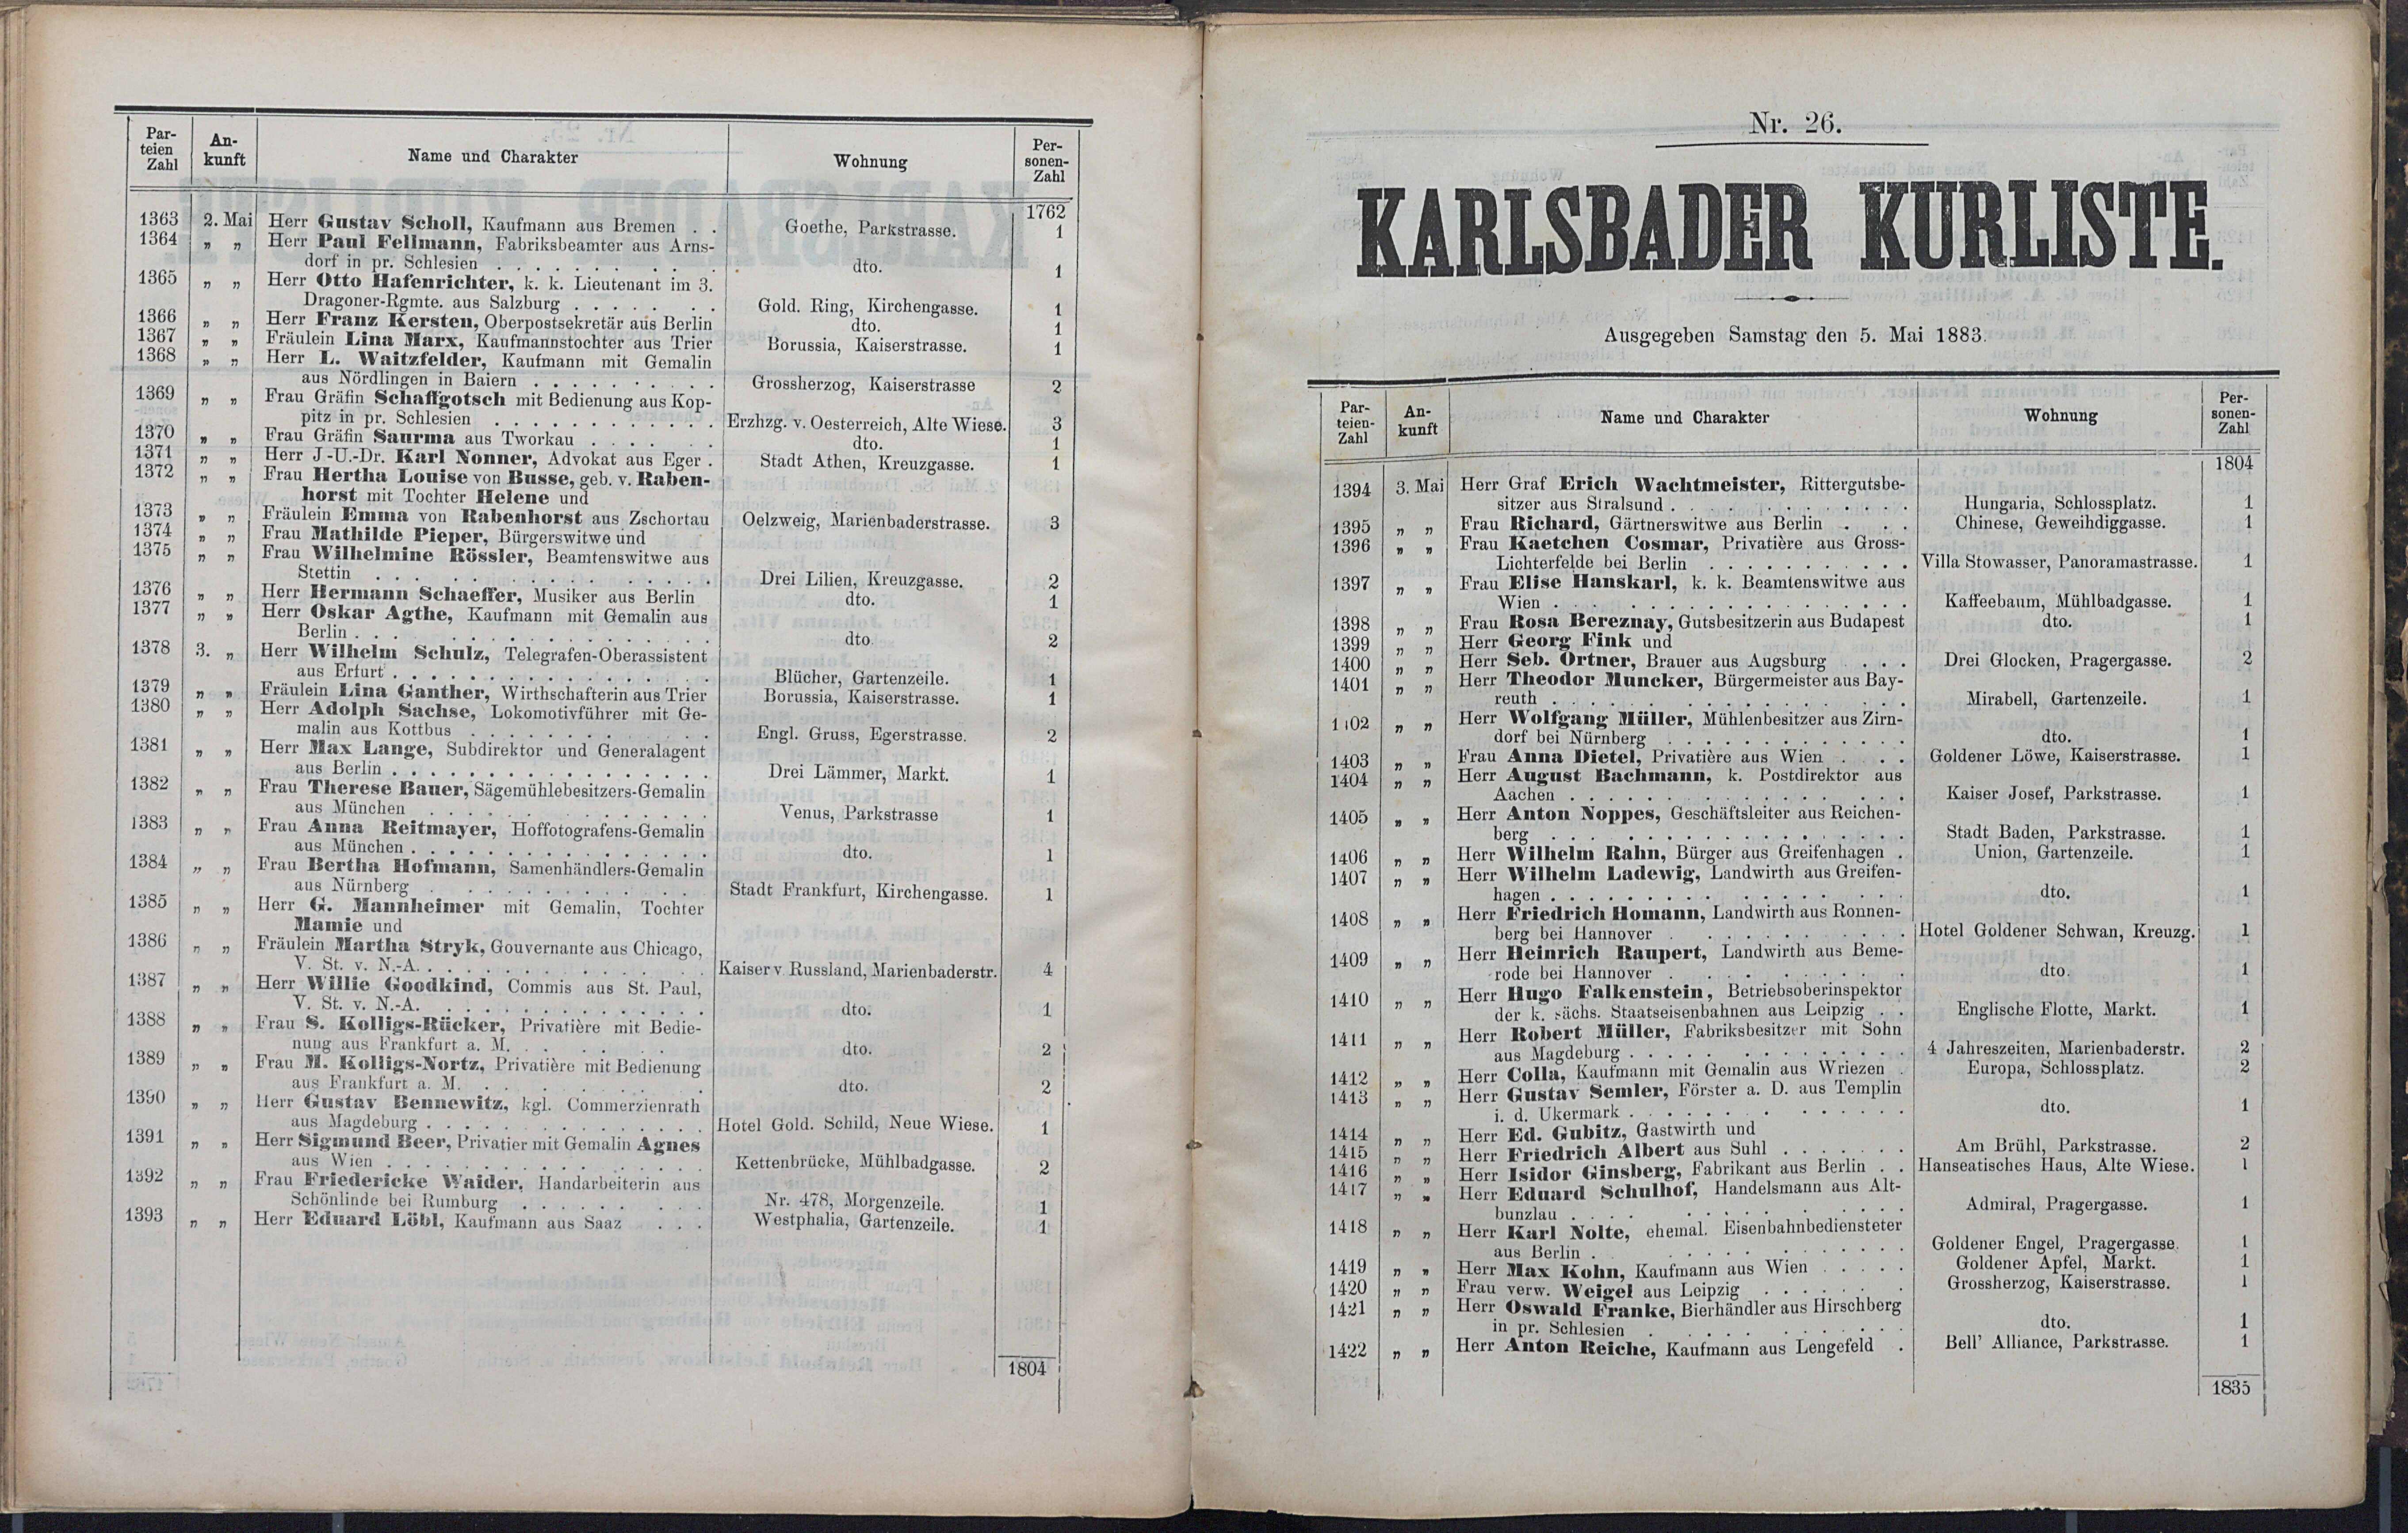 78. soap-kv_knihovna_karlsbader-kurliste-1883_0790